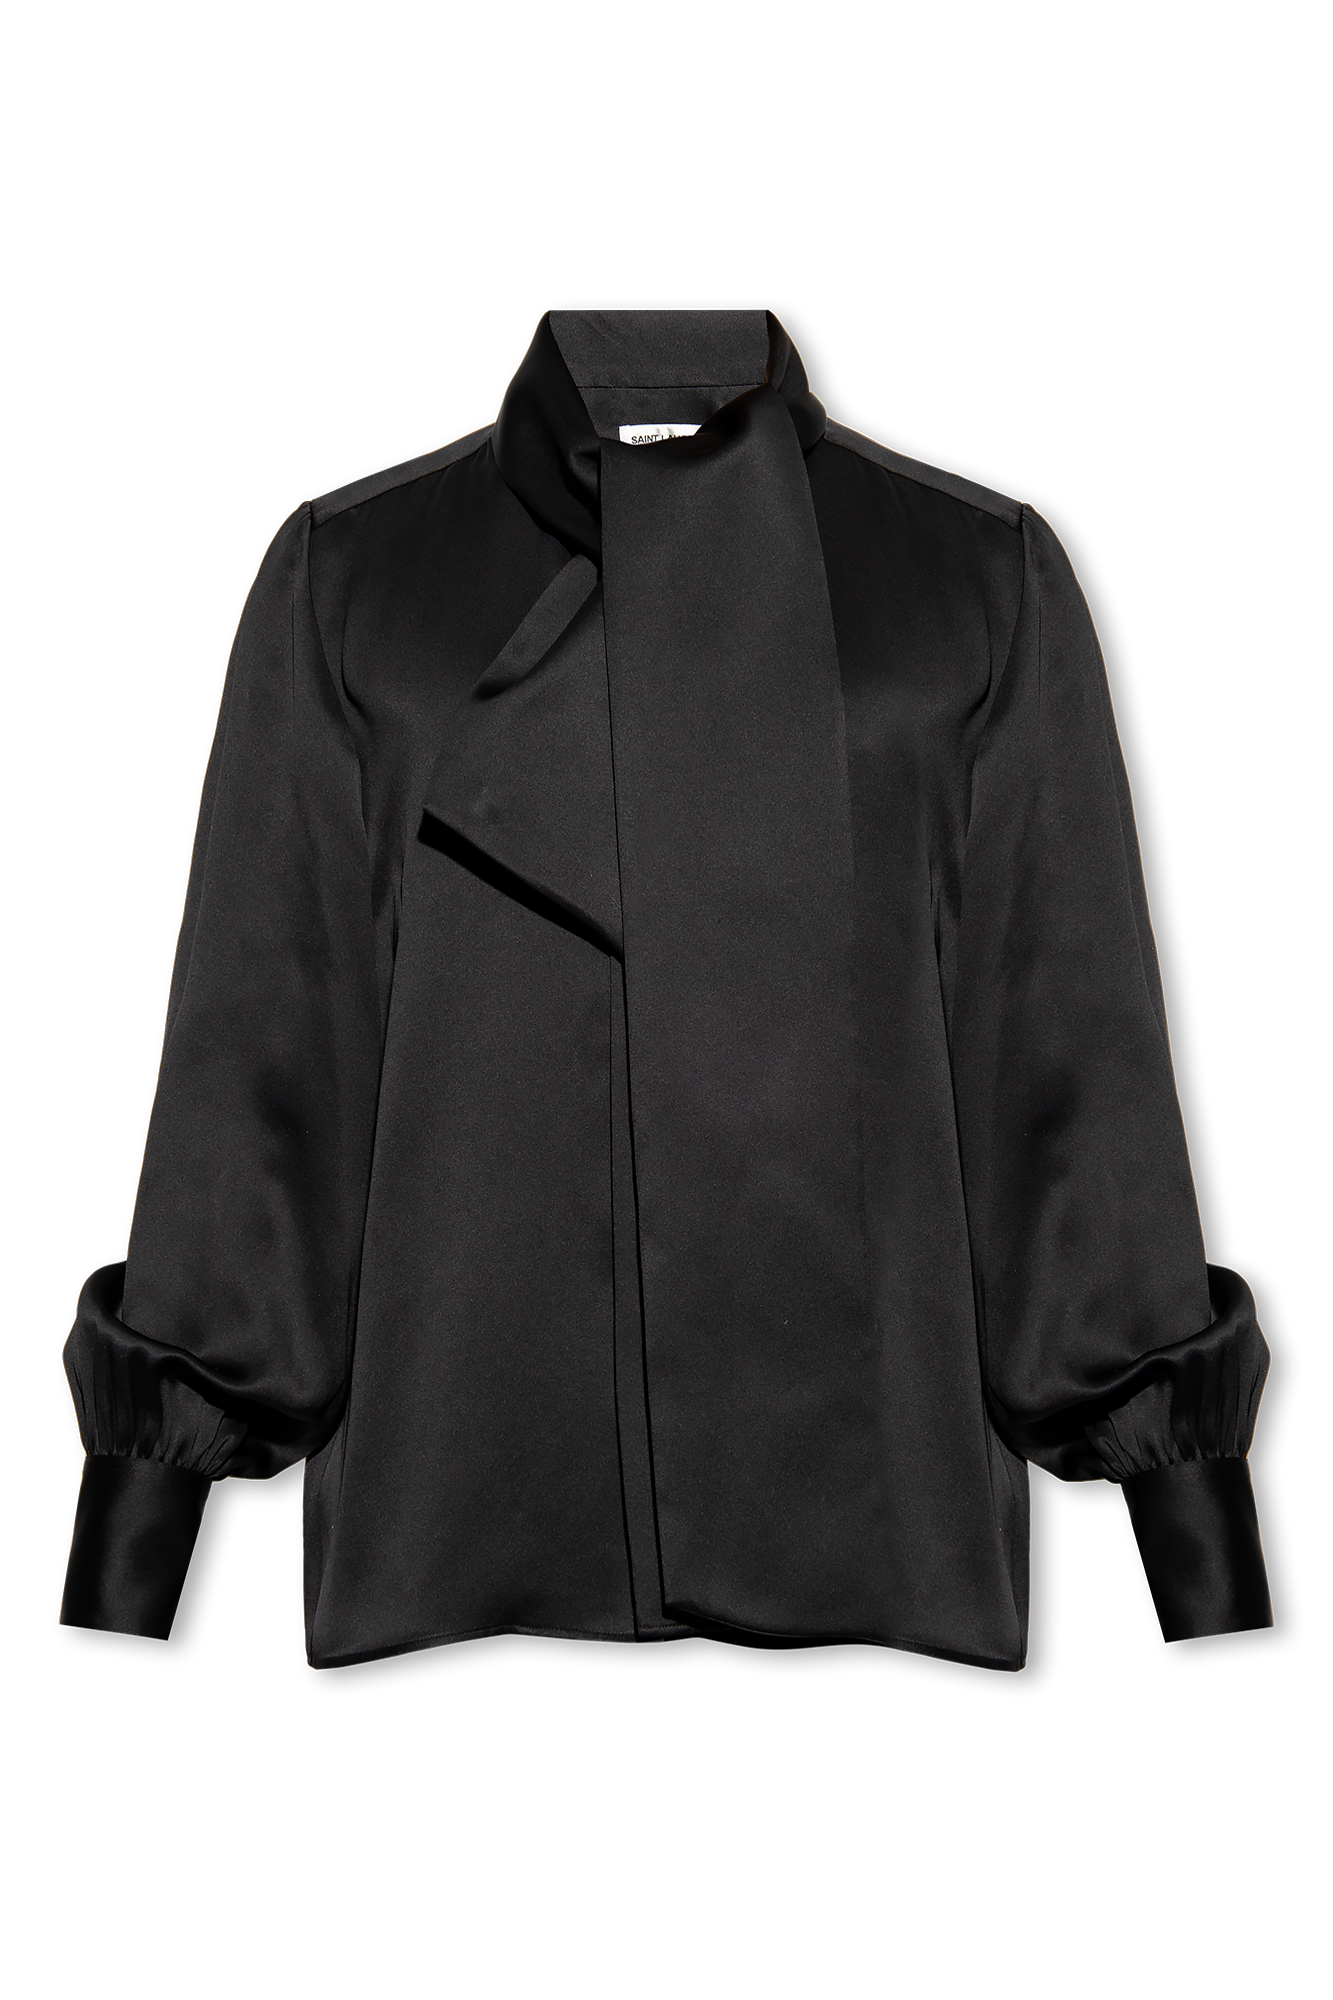 Silk shirt Louis Vuitton Black size XXL International in Silk